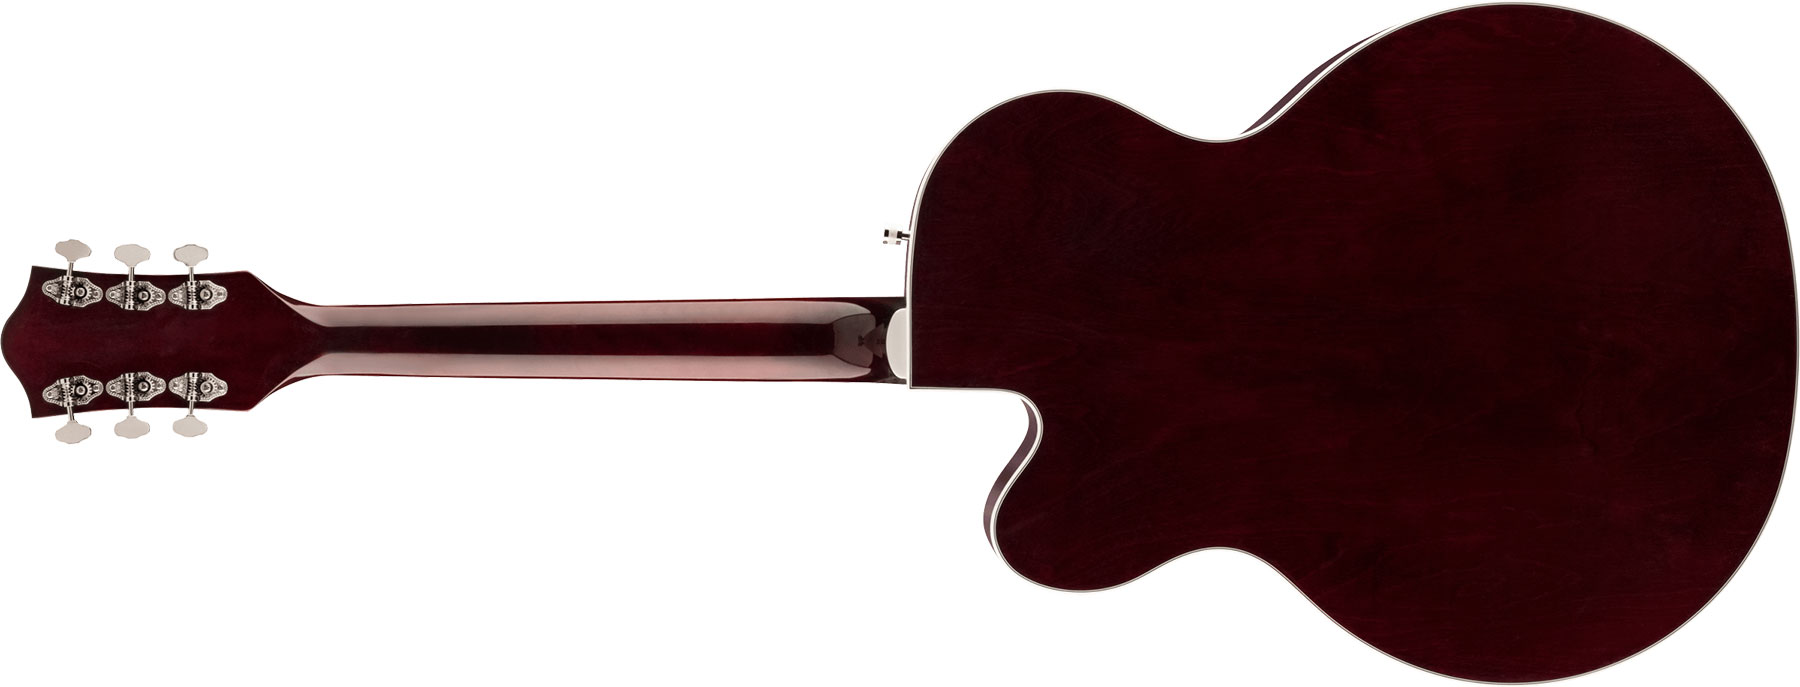 Gretsch G5420t Classic Bigsby Electromatic Hollow Body 2h Trem Lau - Walnut Stain - Semi hollow elektriche gitaar - Variation 1